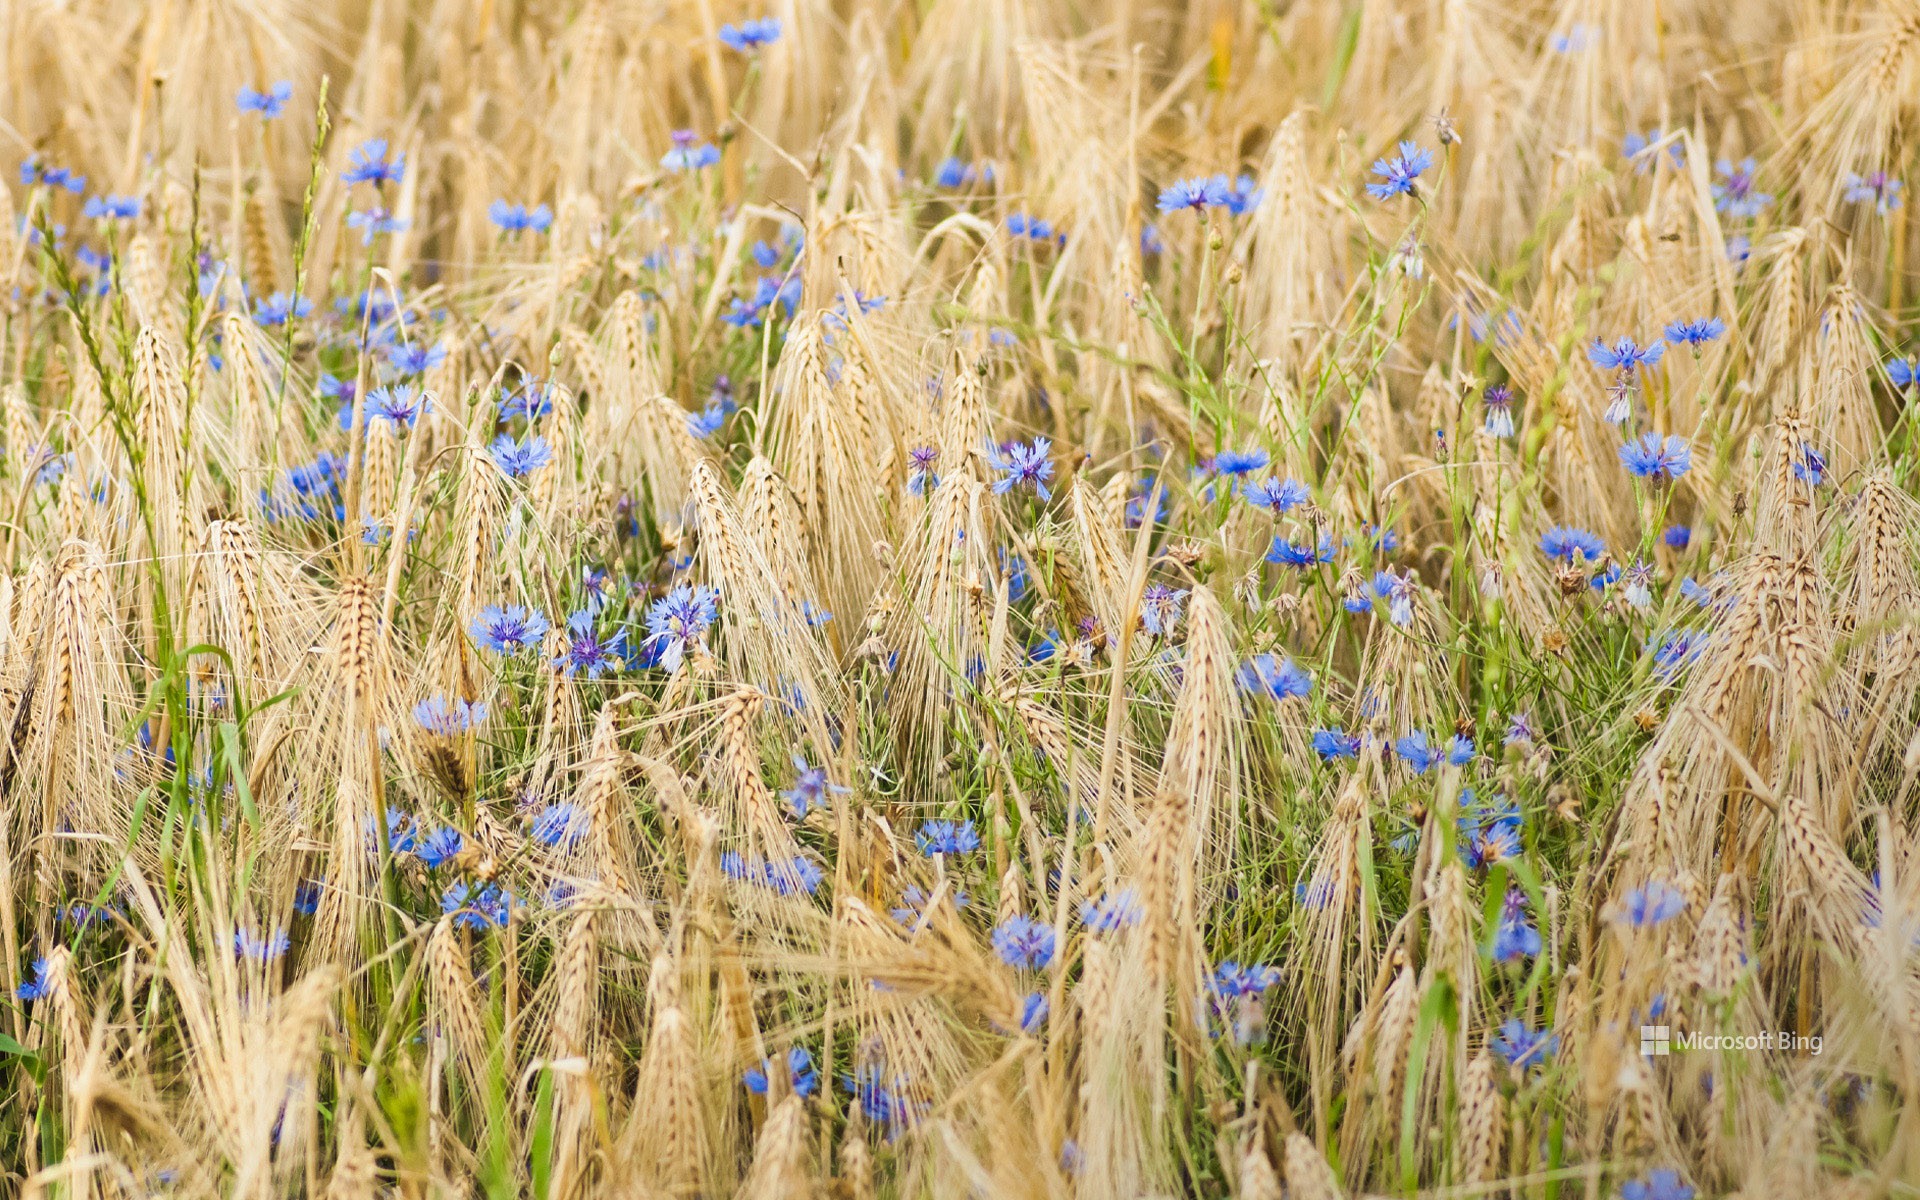 Barley and cornflowers, Nordhausen, Germany